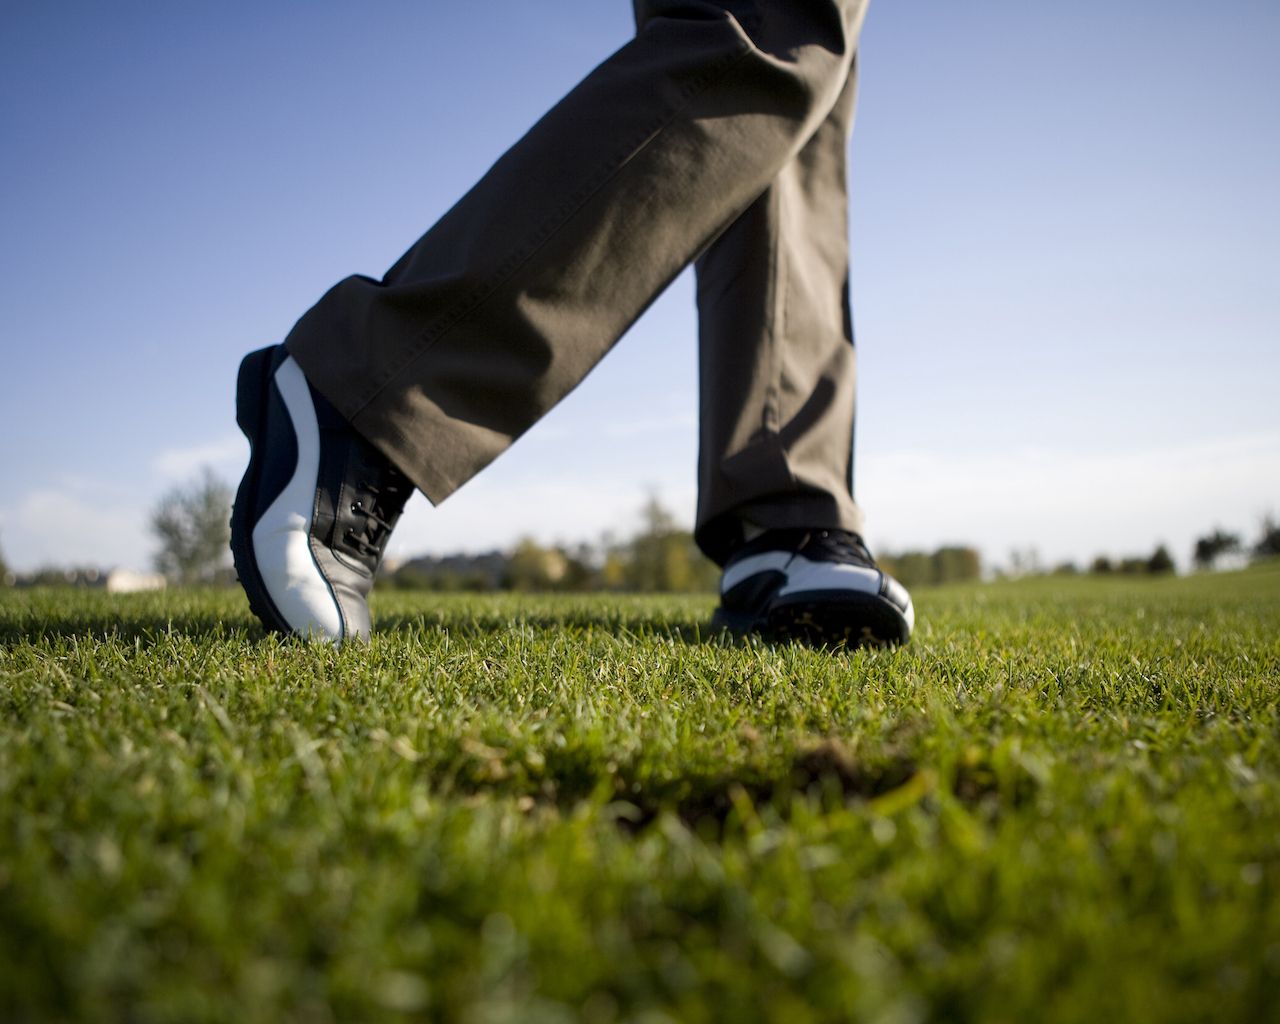 Golfer's feet during swing